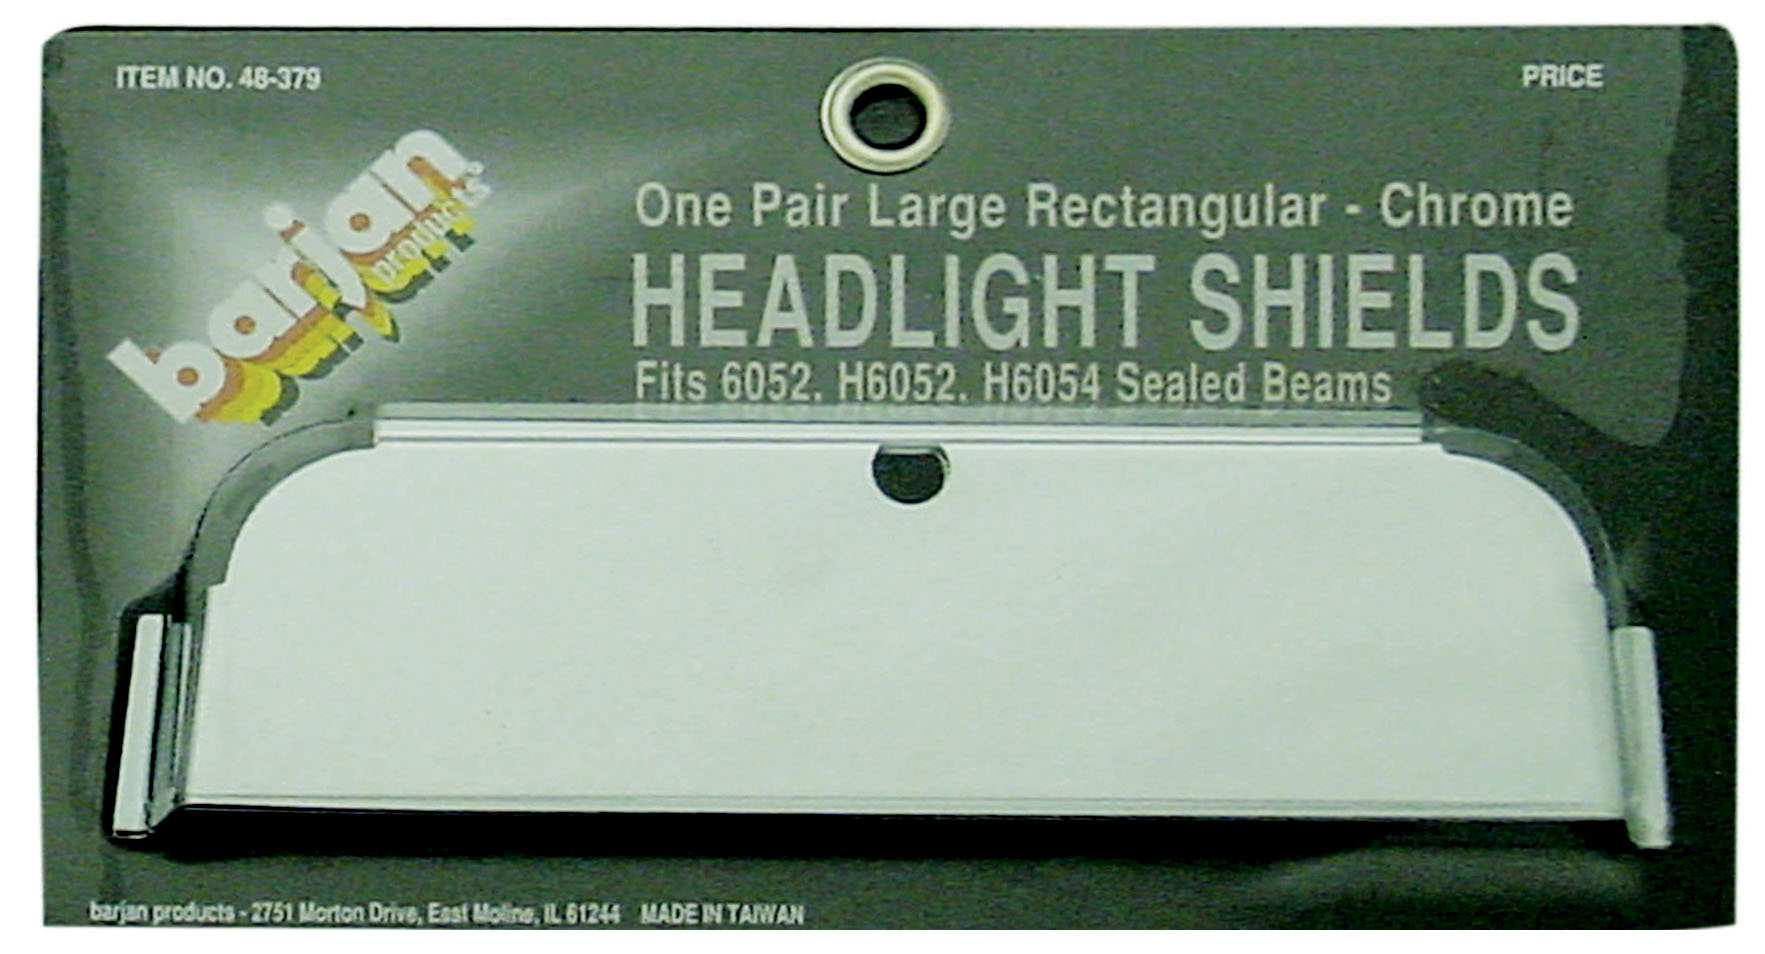 HEADLIGHT SHIELDS LG RECT 1/PR